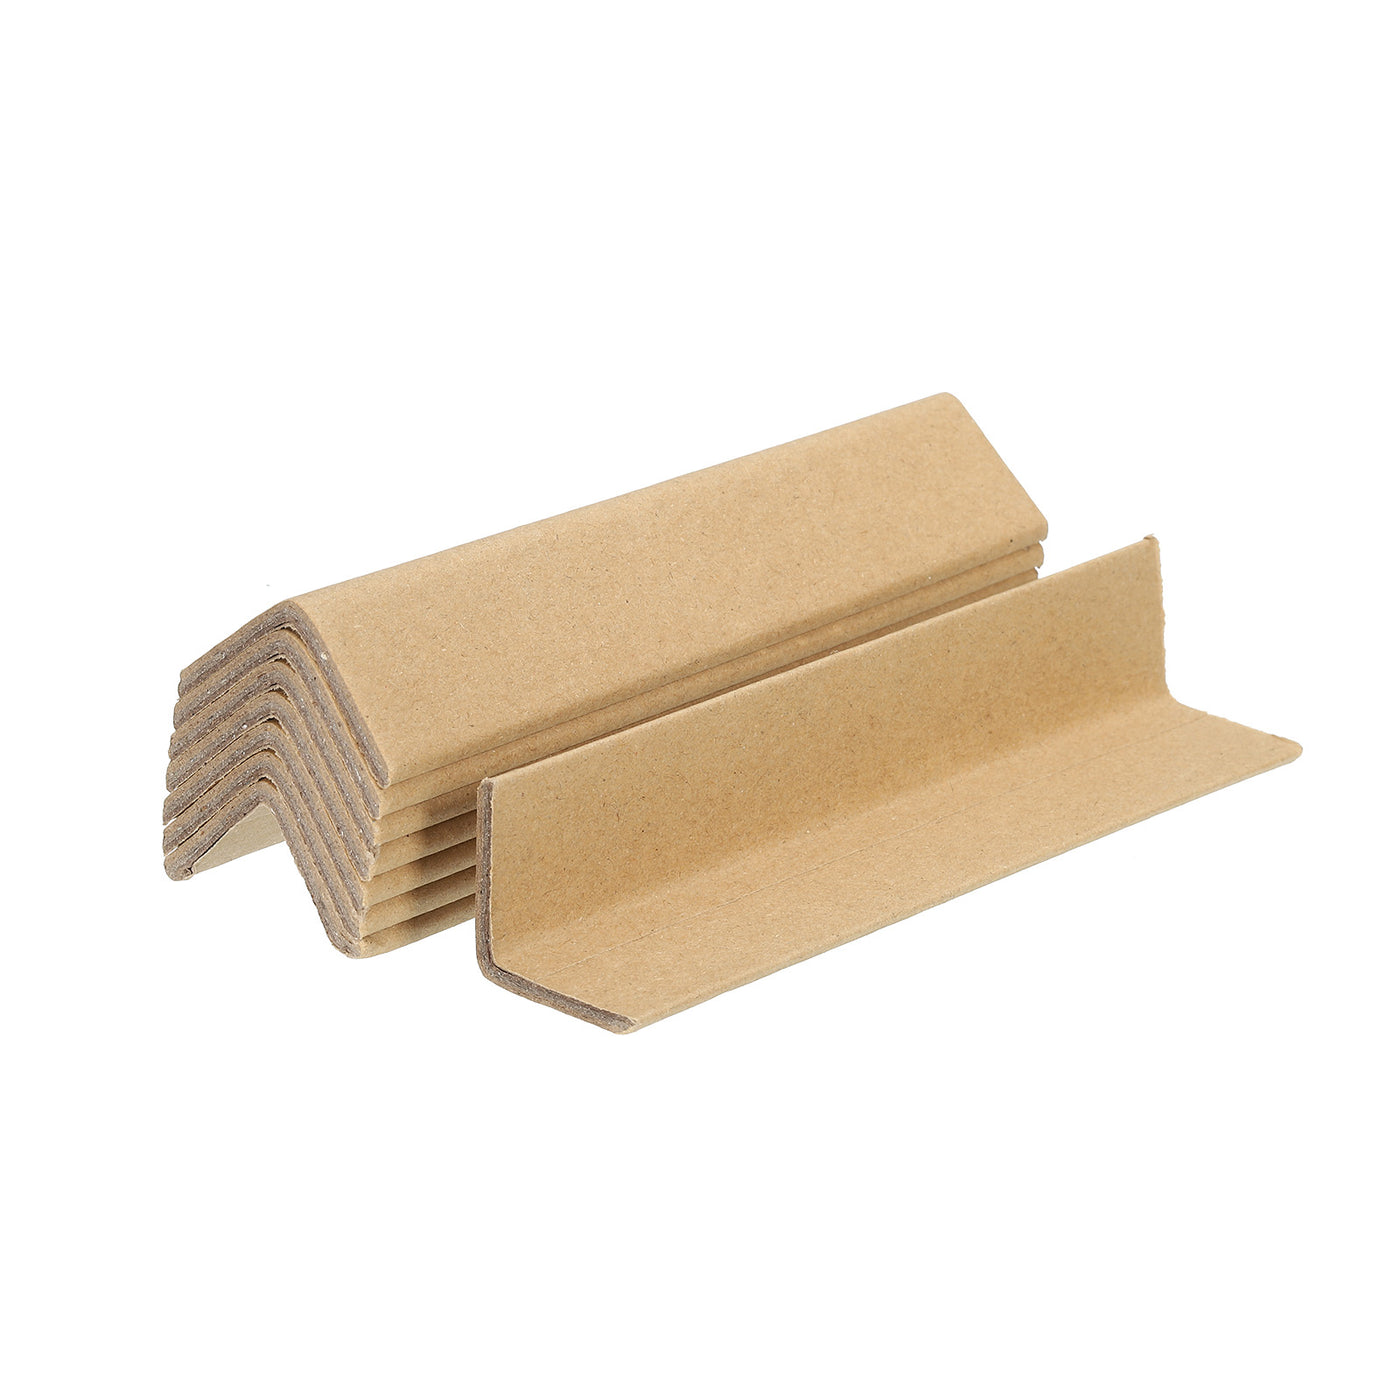 Harfington Adjustable Cardboard Corner Protector Package Frame 80x30mm Thick 3mm 24pcs